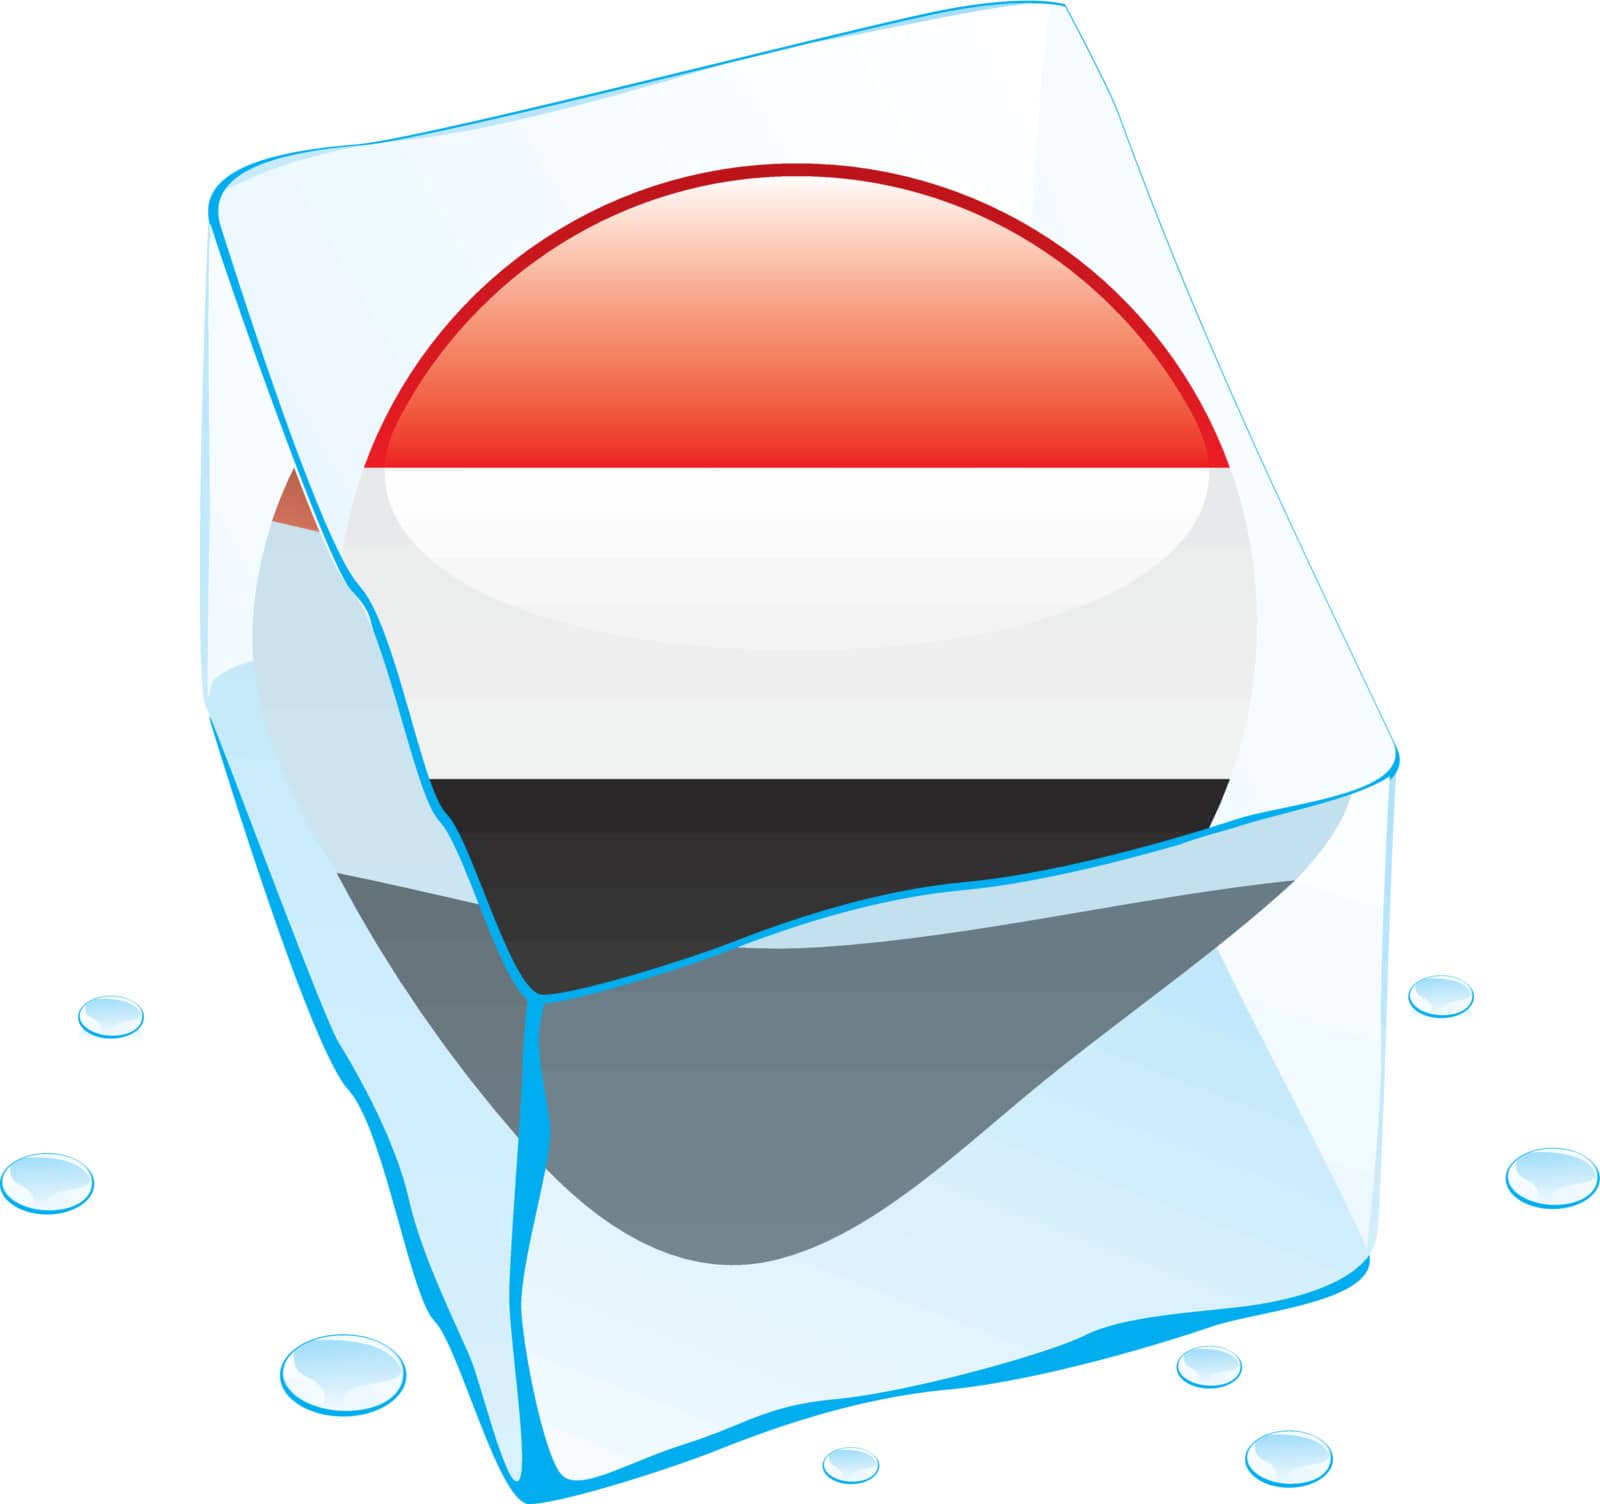 yemen button flag frozen in ice cube by pilgrimartworks